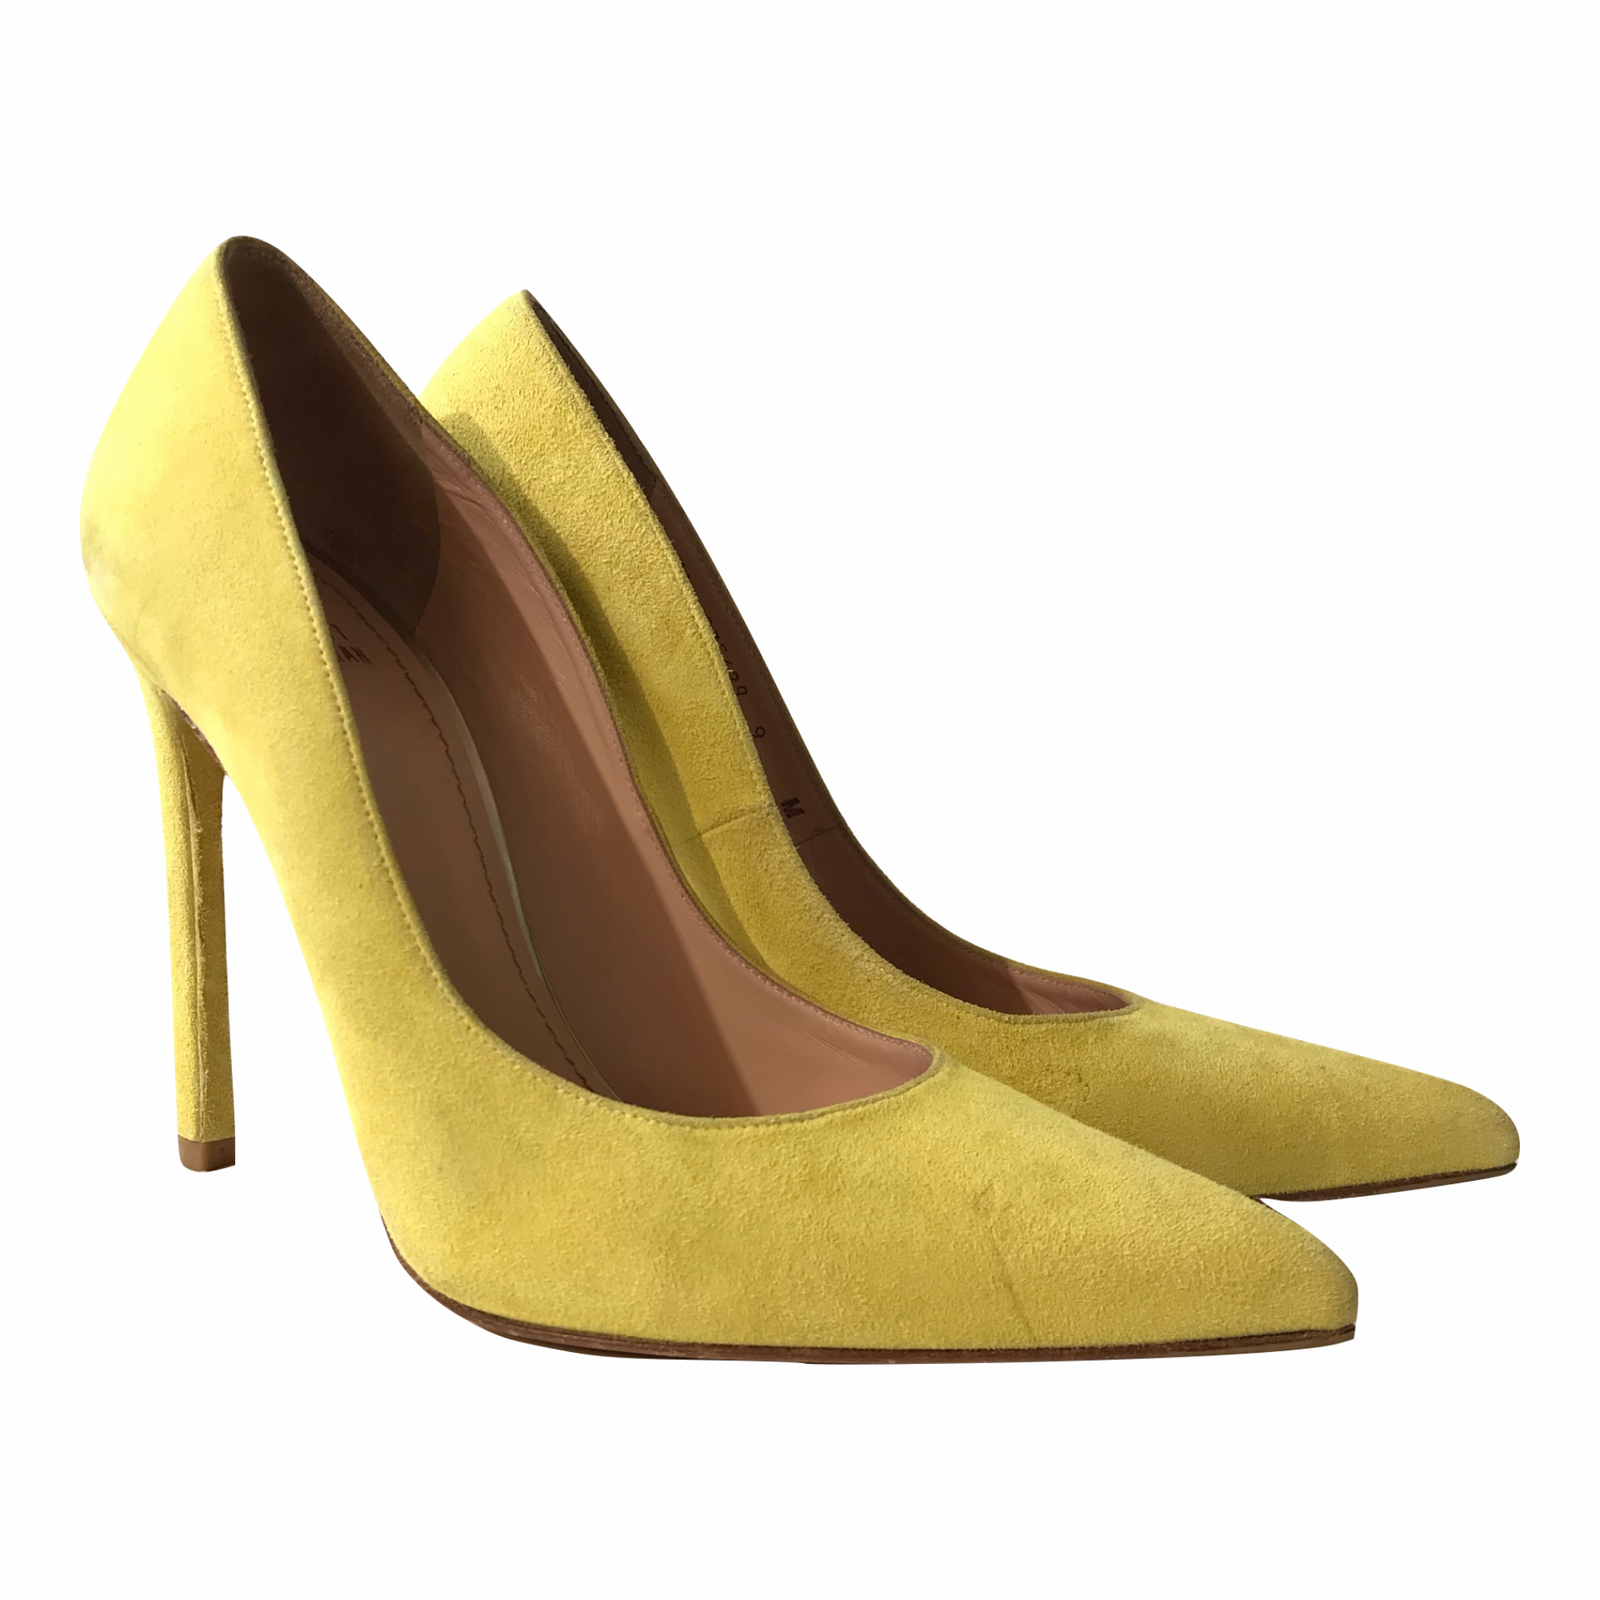 Luxury women's shoes - Instinct 100 Saint Laurent patent mustard yellow  leather pumps